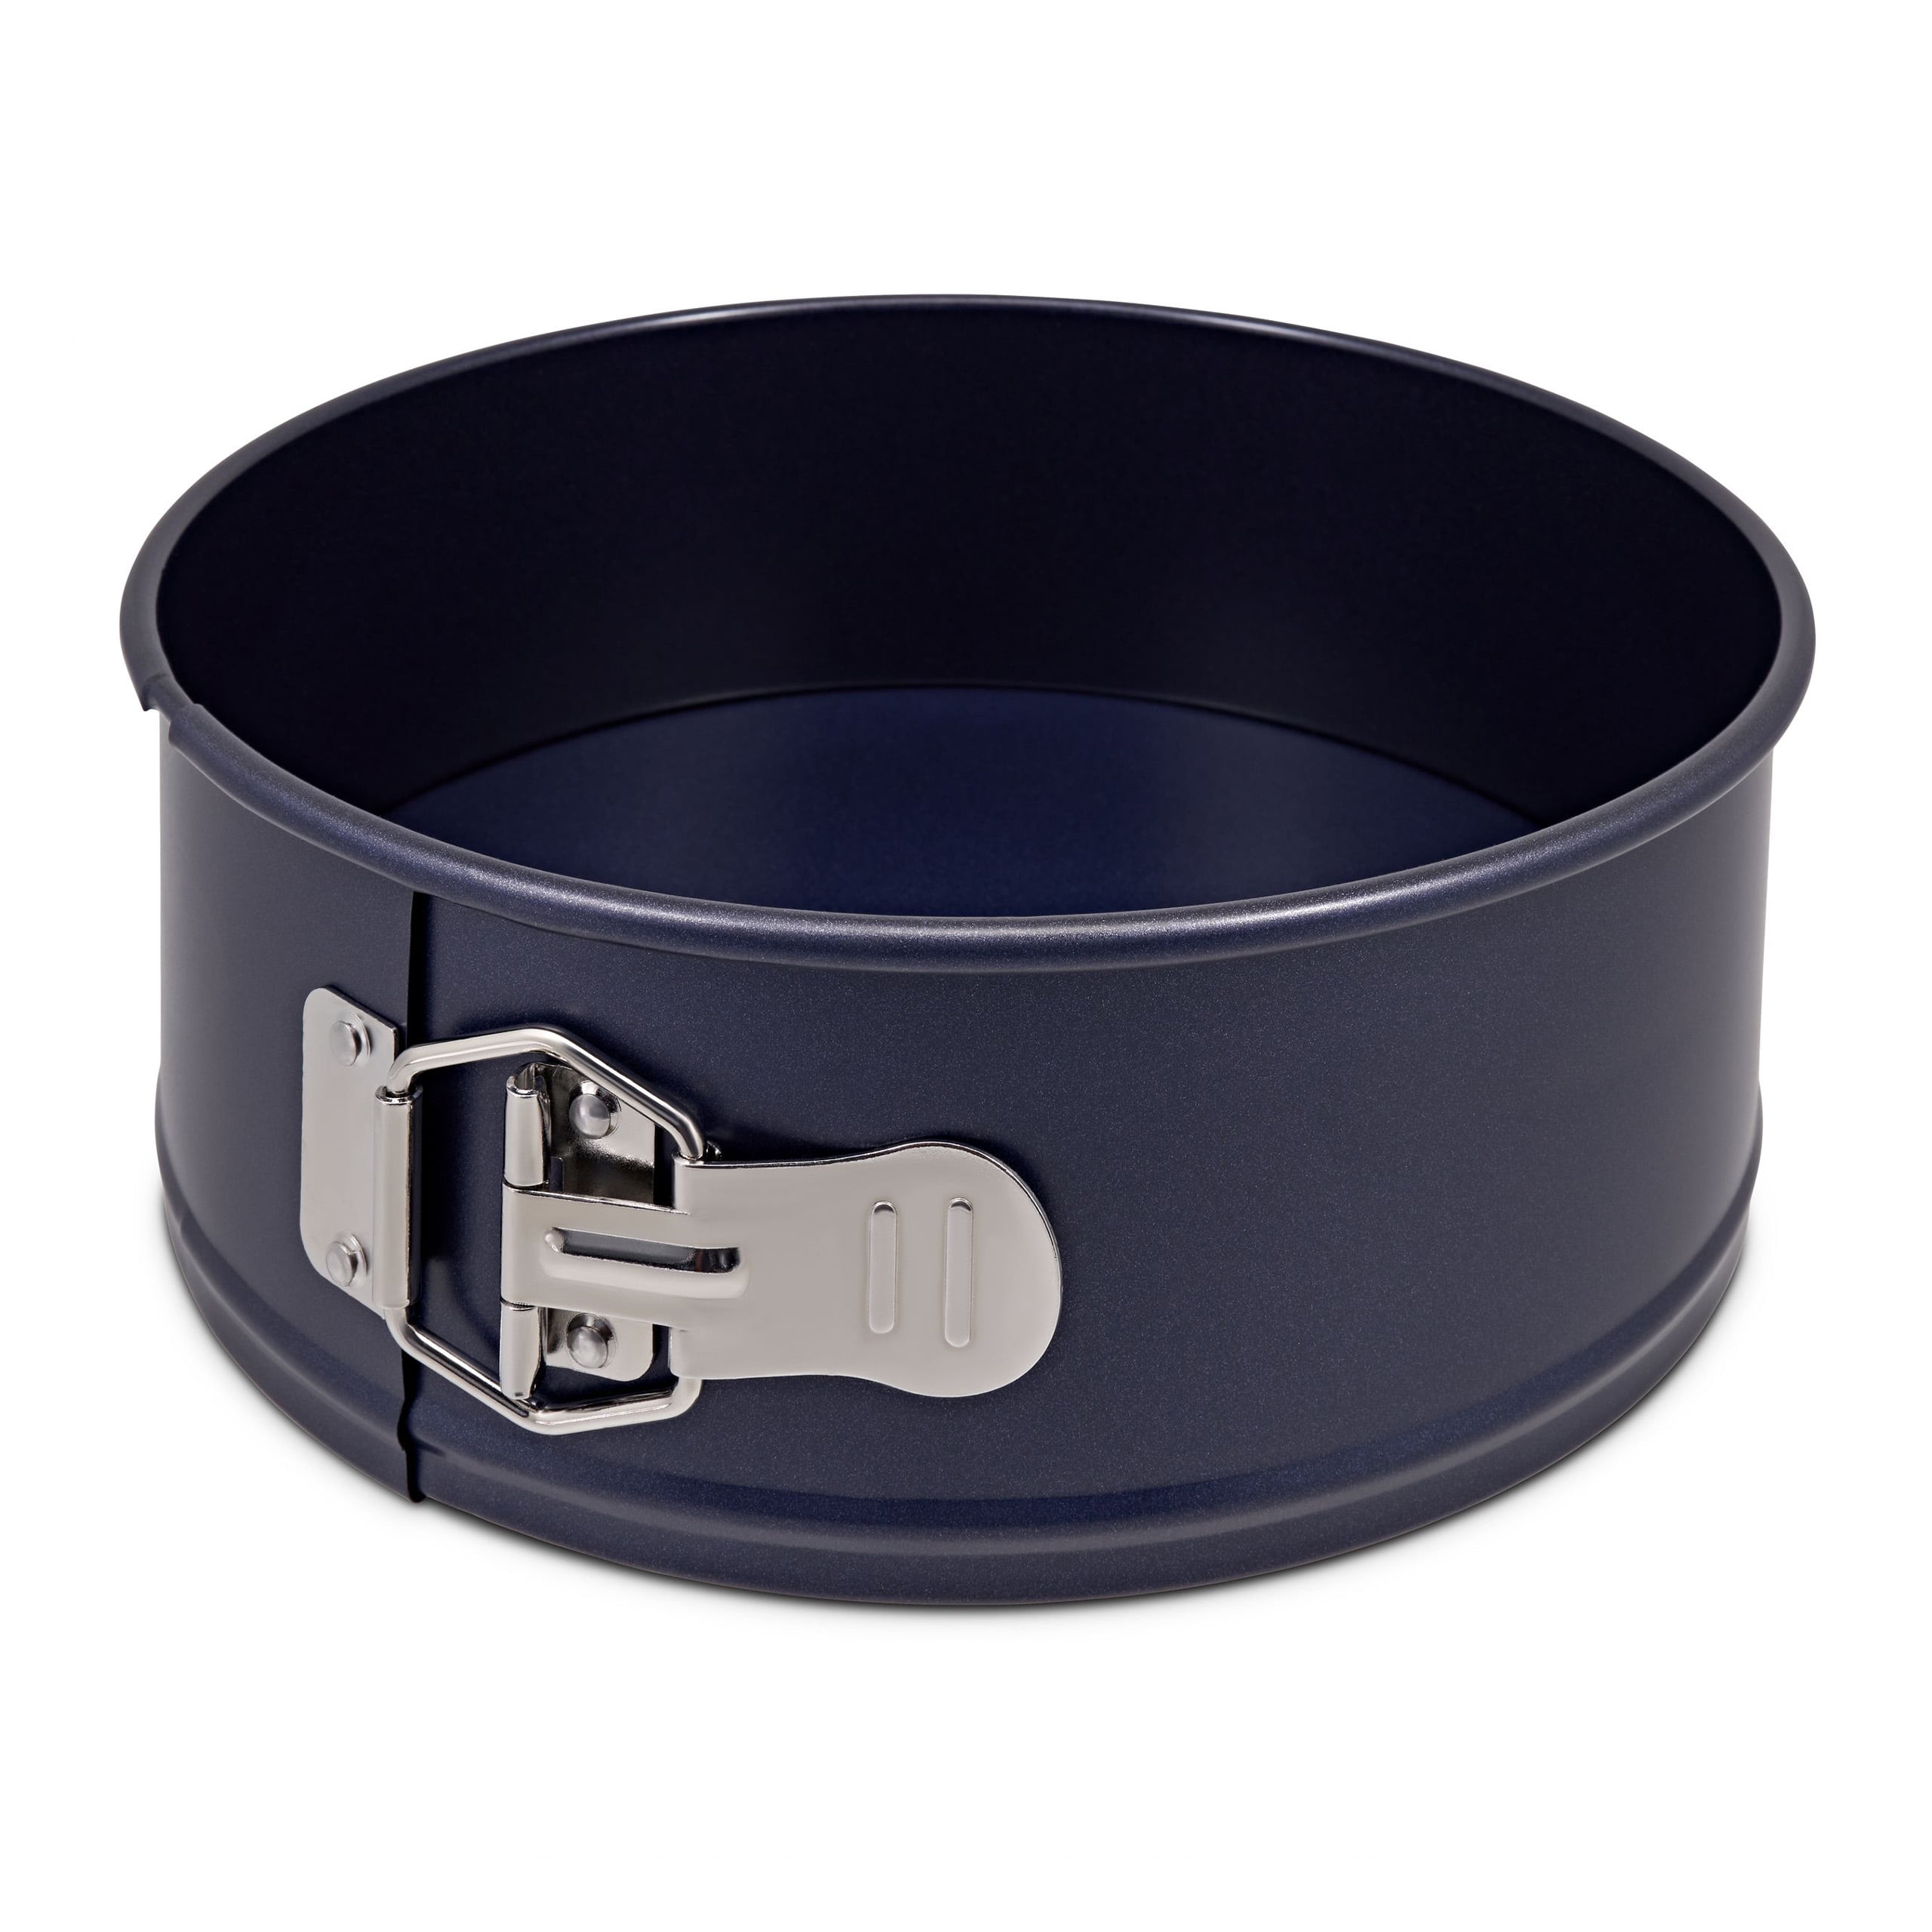 Diamond-Infused Non-Stick Navy Blue Round Baking Pan, 9-inch - Wilton